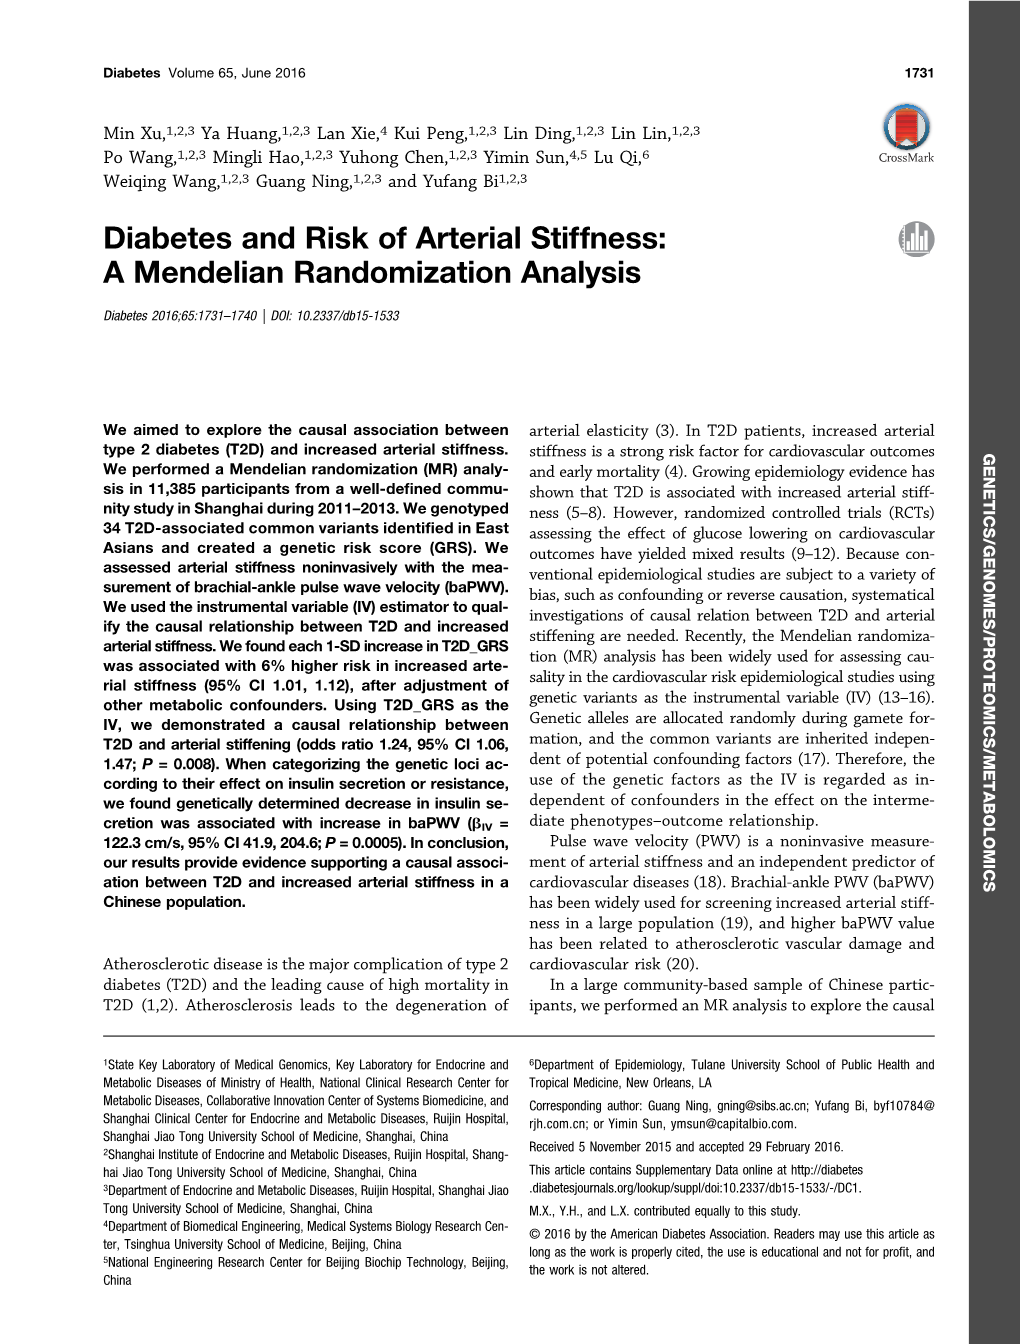 Diabetes and Risk of Arterial Stiffness: a Mendelian Randomization Analysis